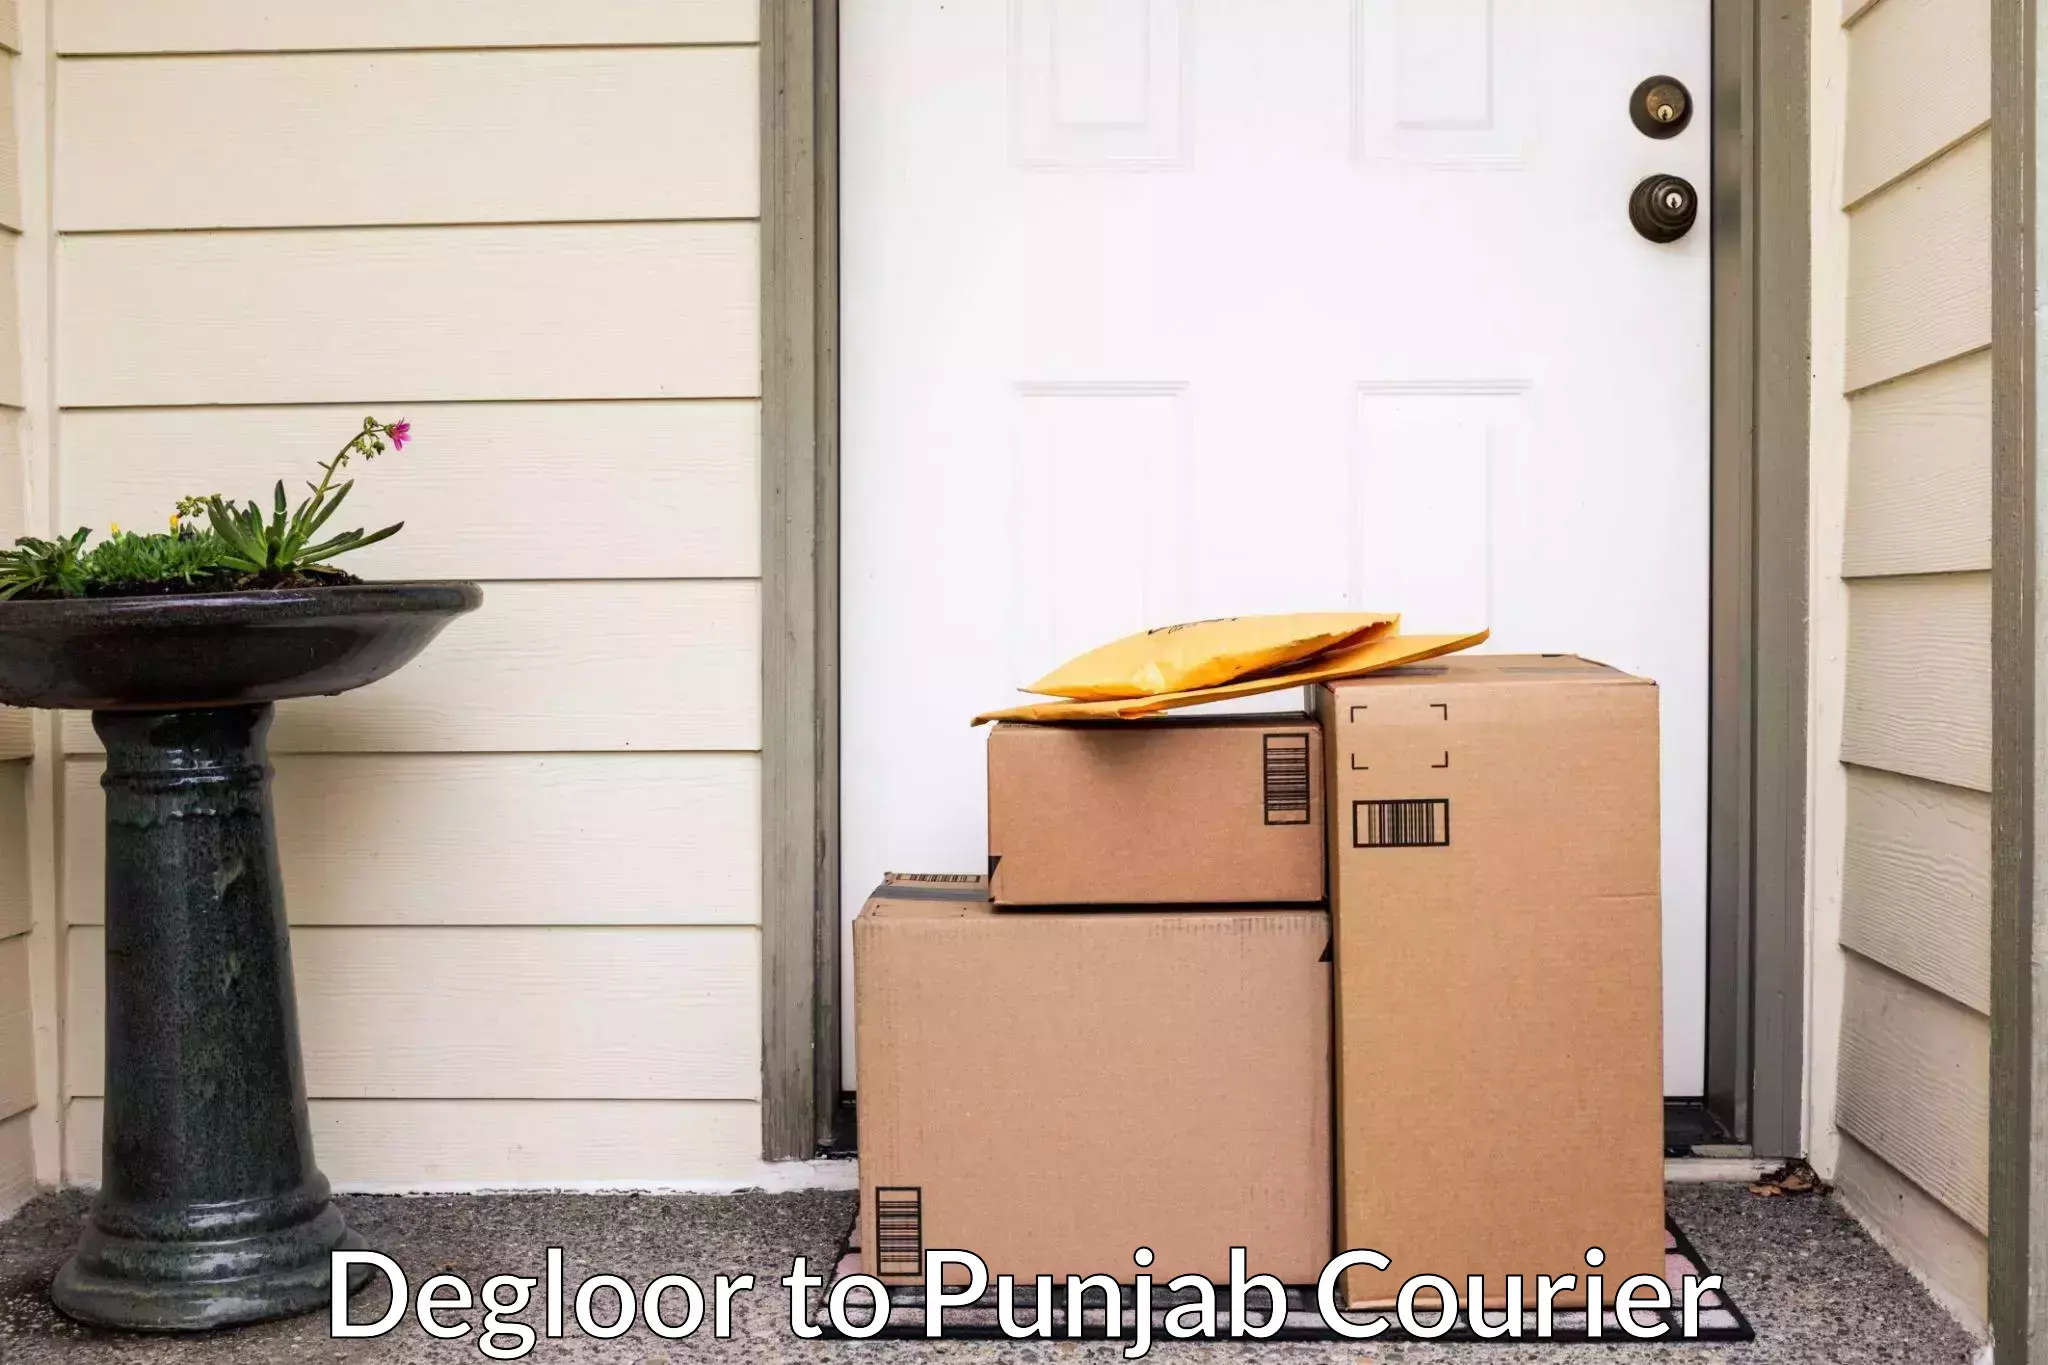 Expert goods movers Degloor to Punjab